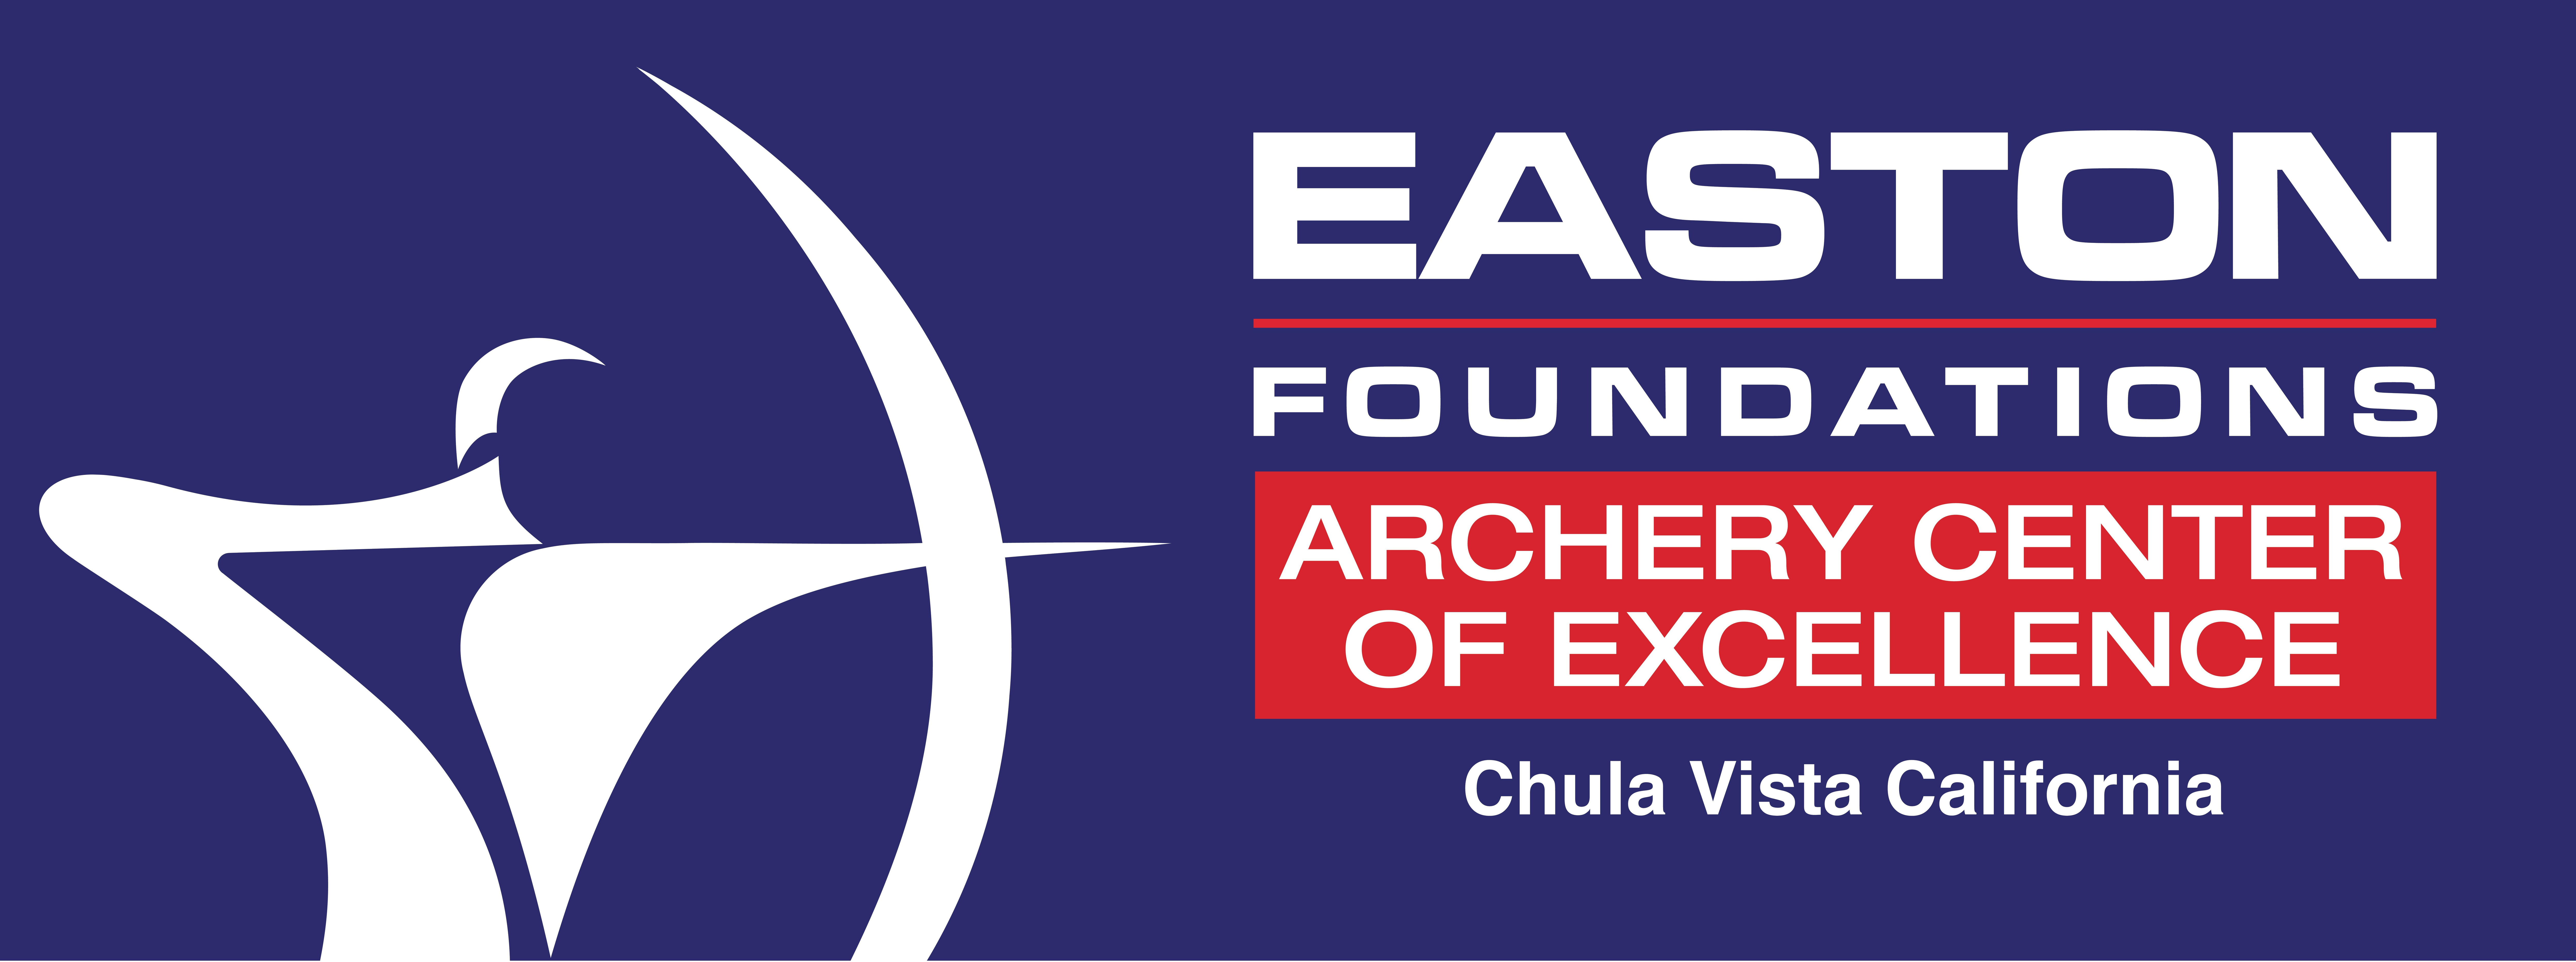 Easton Archery Logo - Sports Innovator Jim Easton Gifts New Easton Archery Center of ...